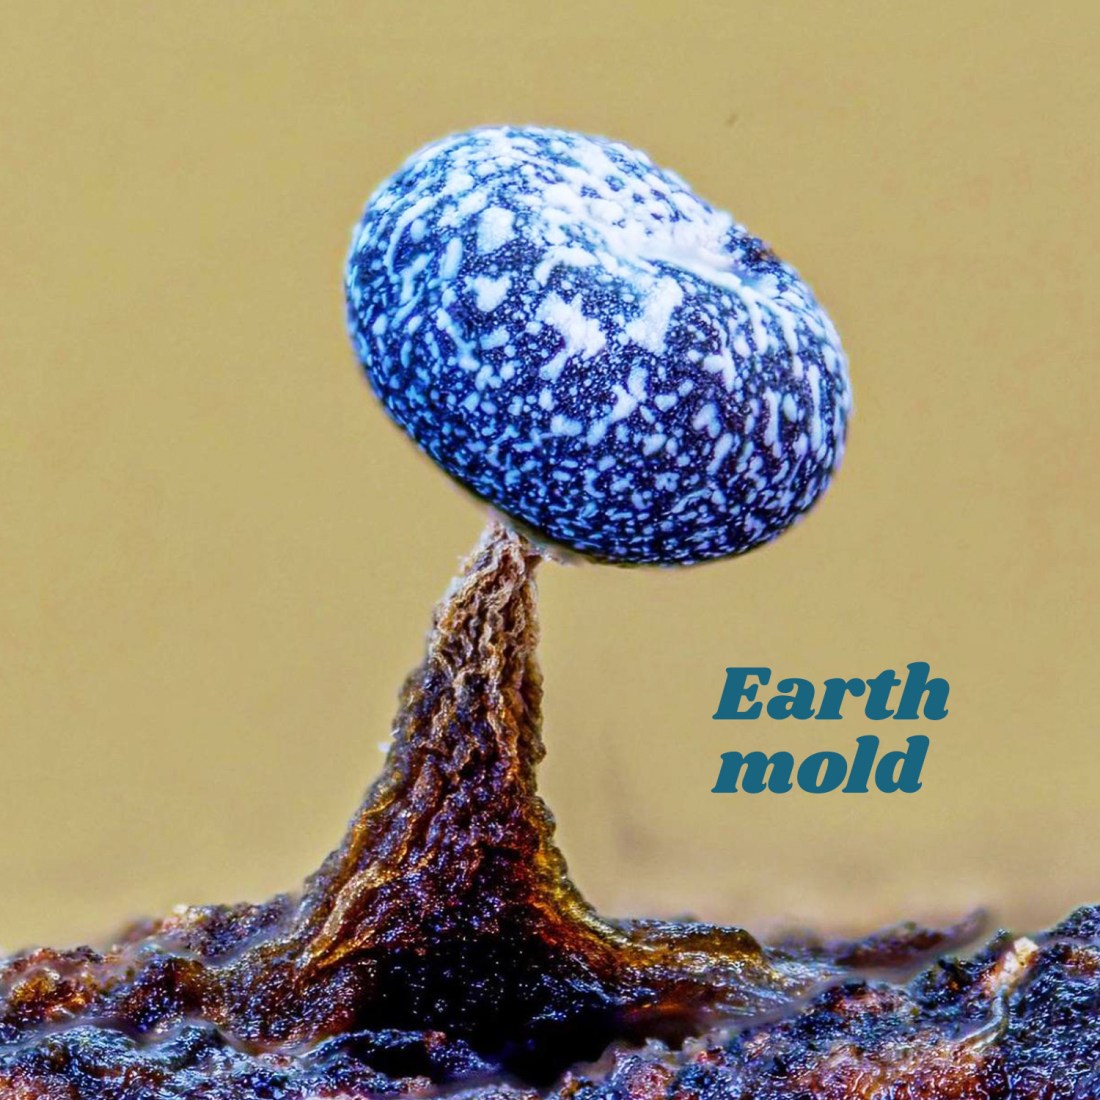 Earth mold